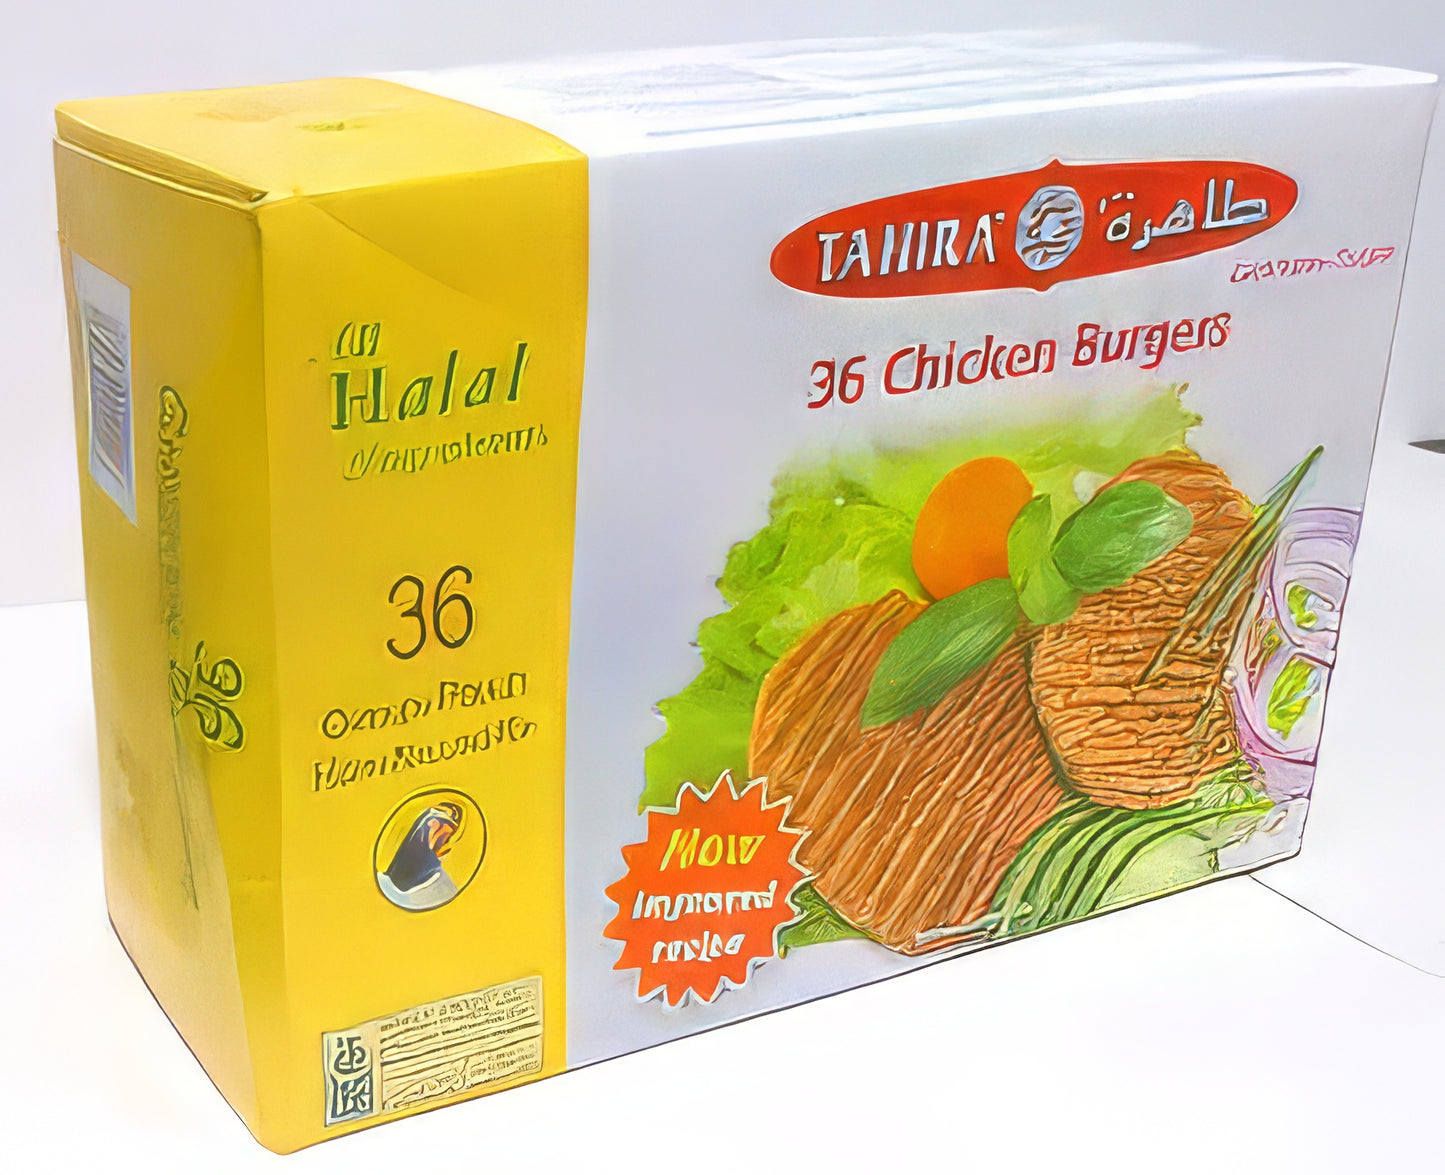 Tahira Chicken Burger halal 36'S